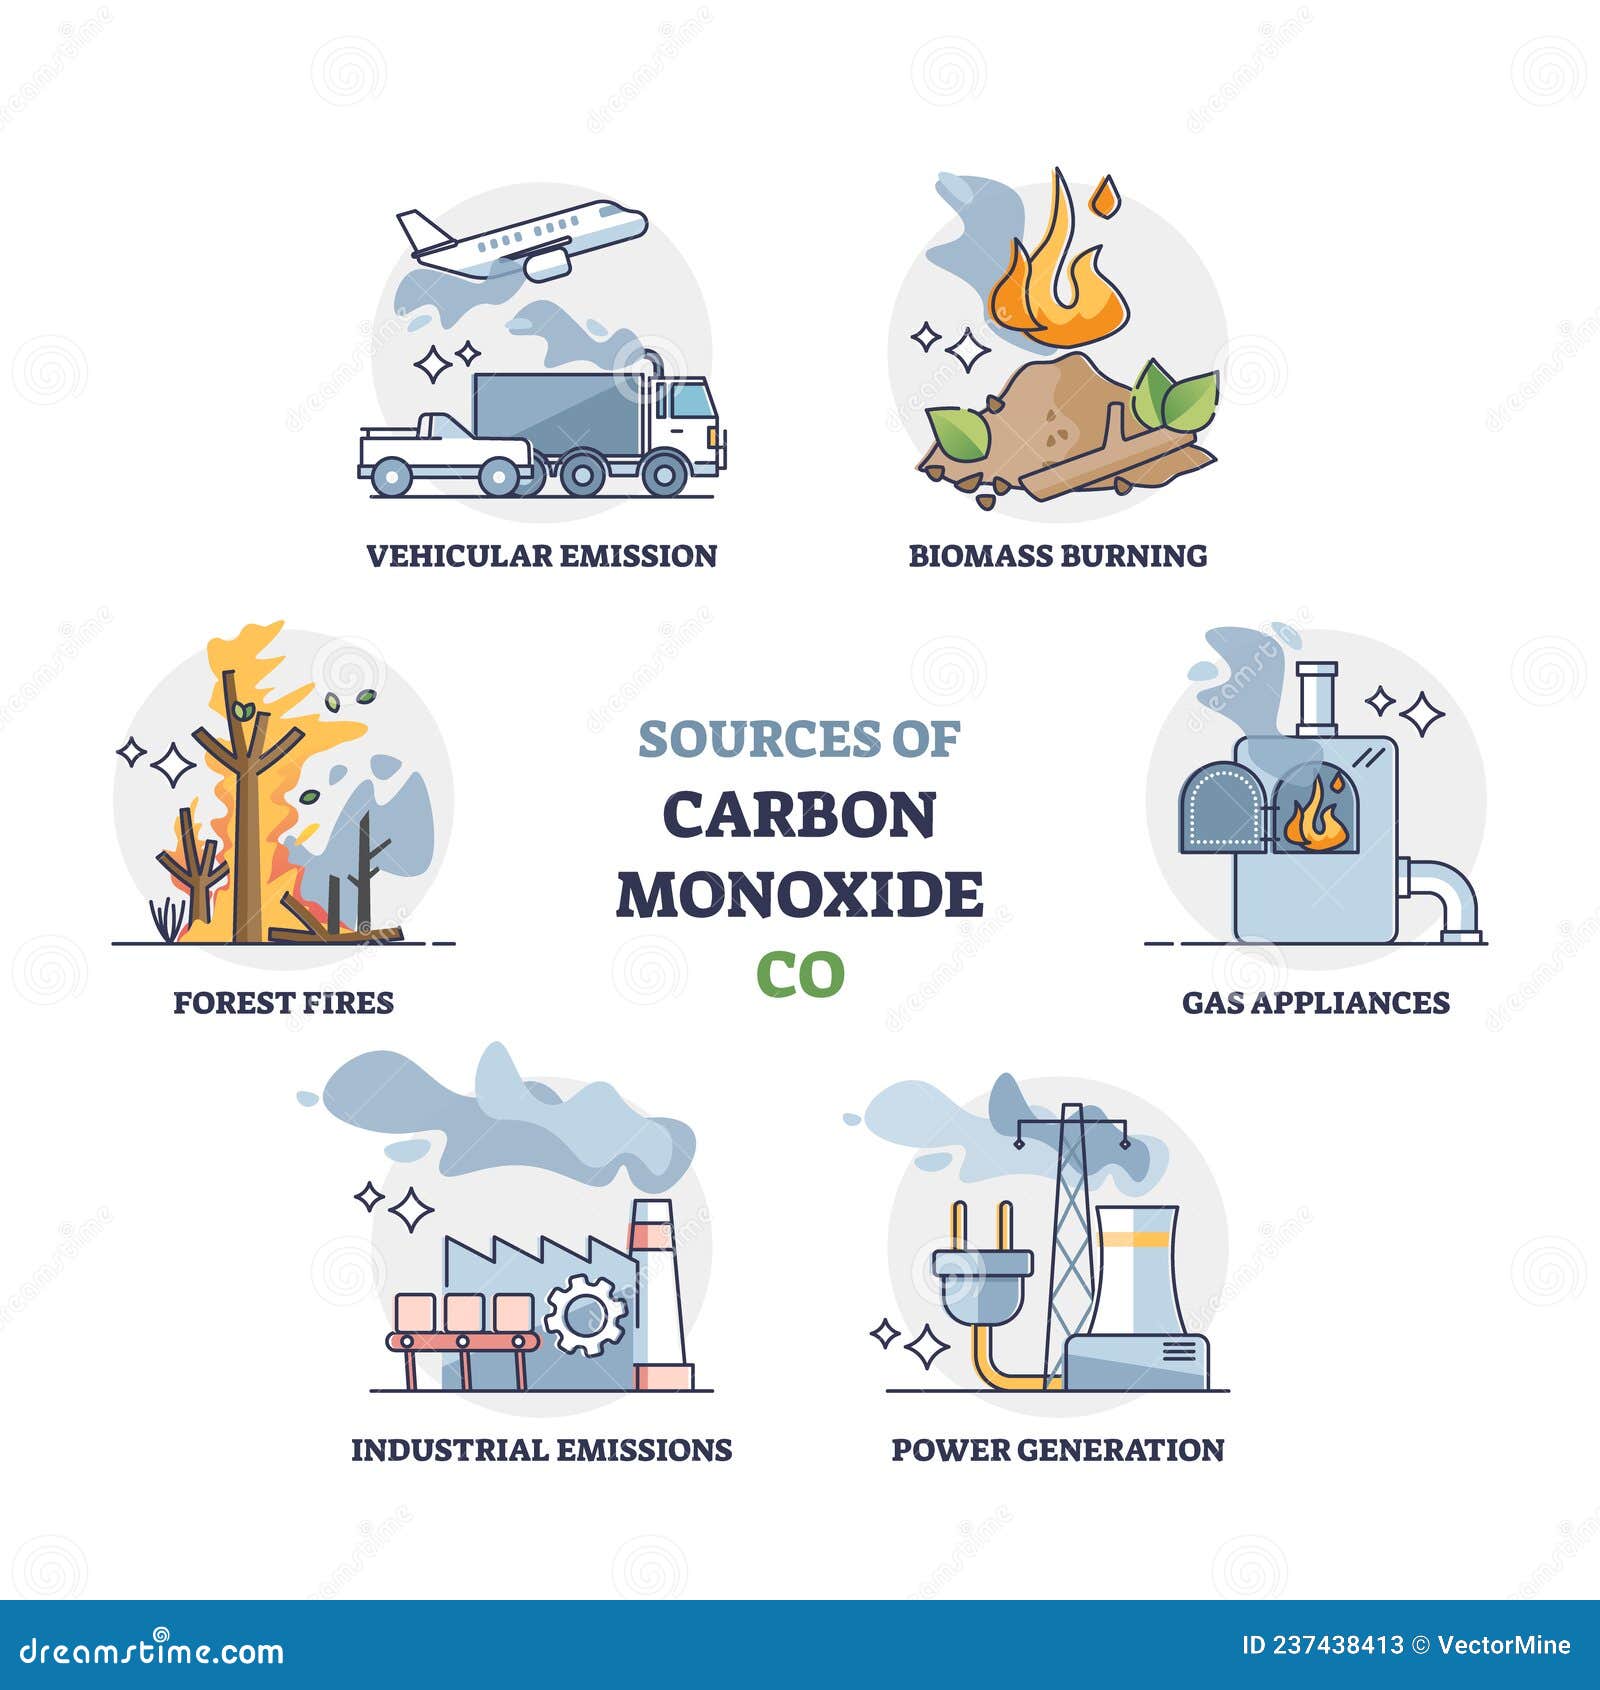 sources of carbon monoxide or co generating source examples outline diagram